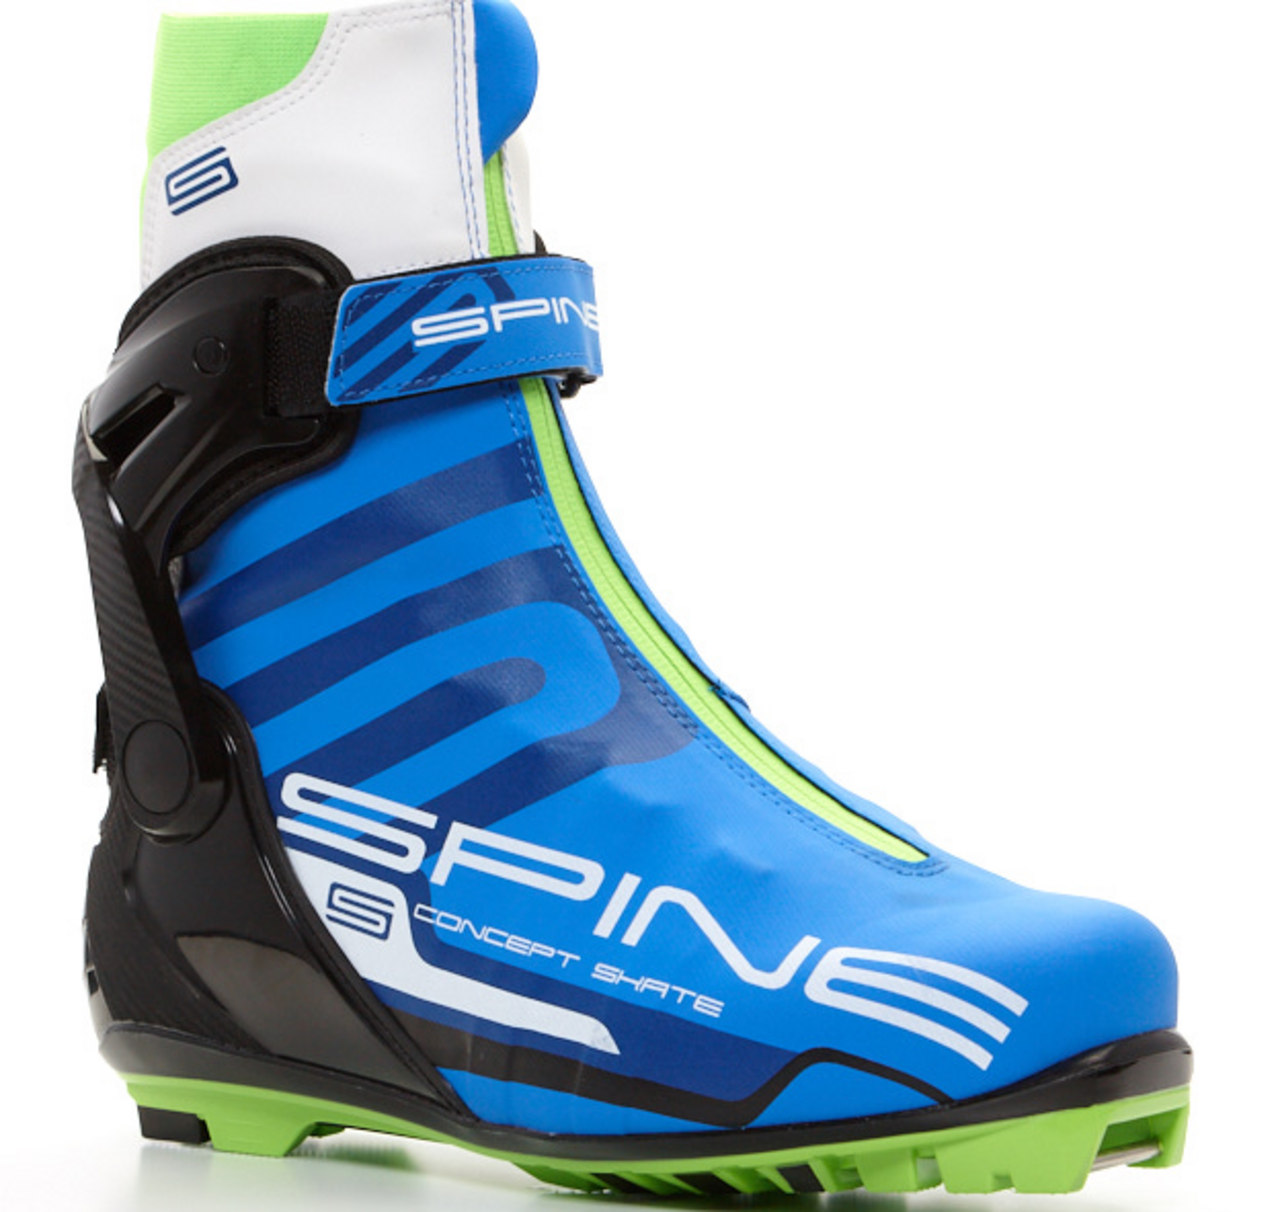 Ботинки Spine NNN. Spine 297 лыжные ботинки. Ботинки Spine Ultimate Skate 599 NNN. Spine Concept Skate Pro 297. Ботинки спайн купить